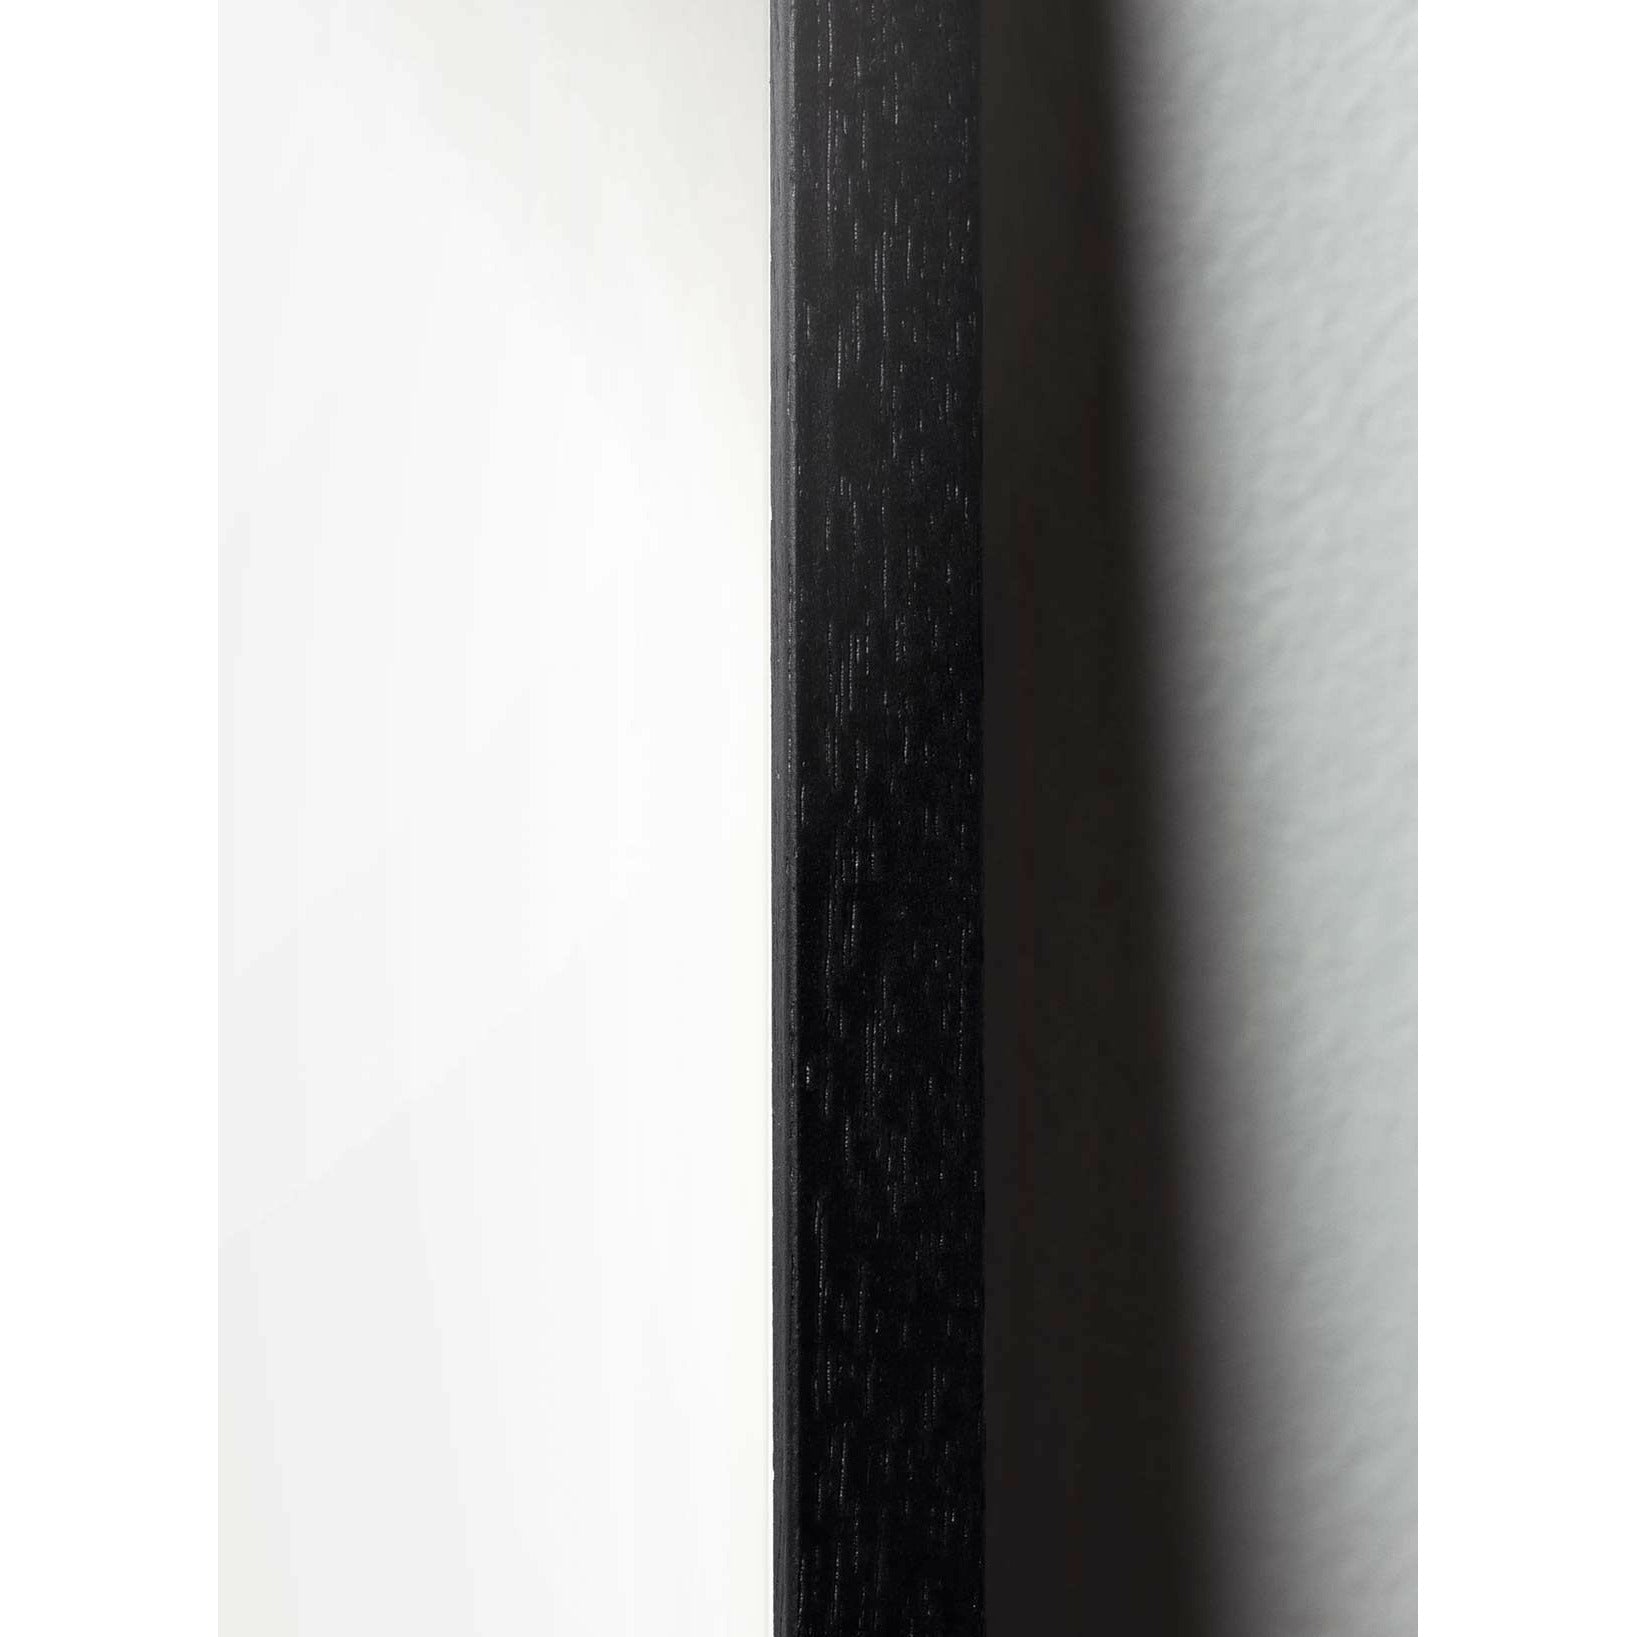 Brainchild Swan Classic Poster, Frame In Black Lacquered Wood 70 X100 Cm, Dark Blue Background